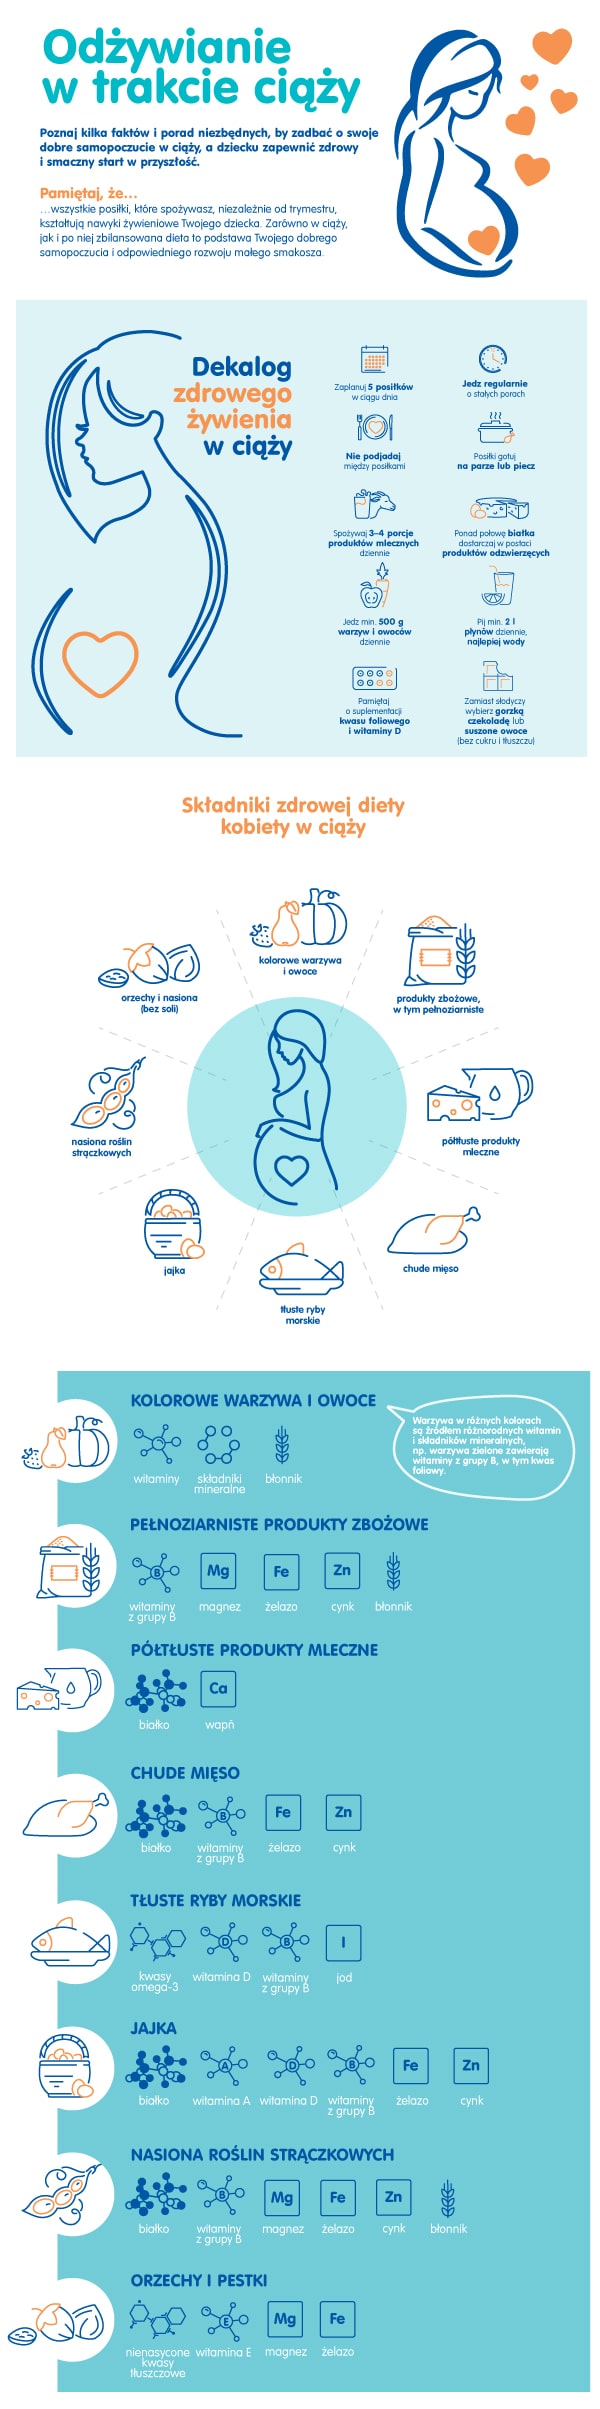 pregnancy diet infographic part 1